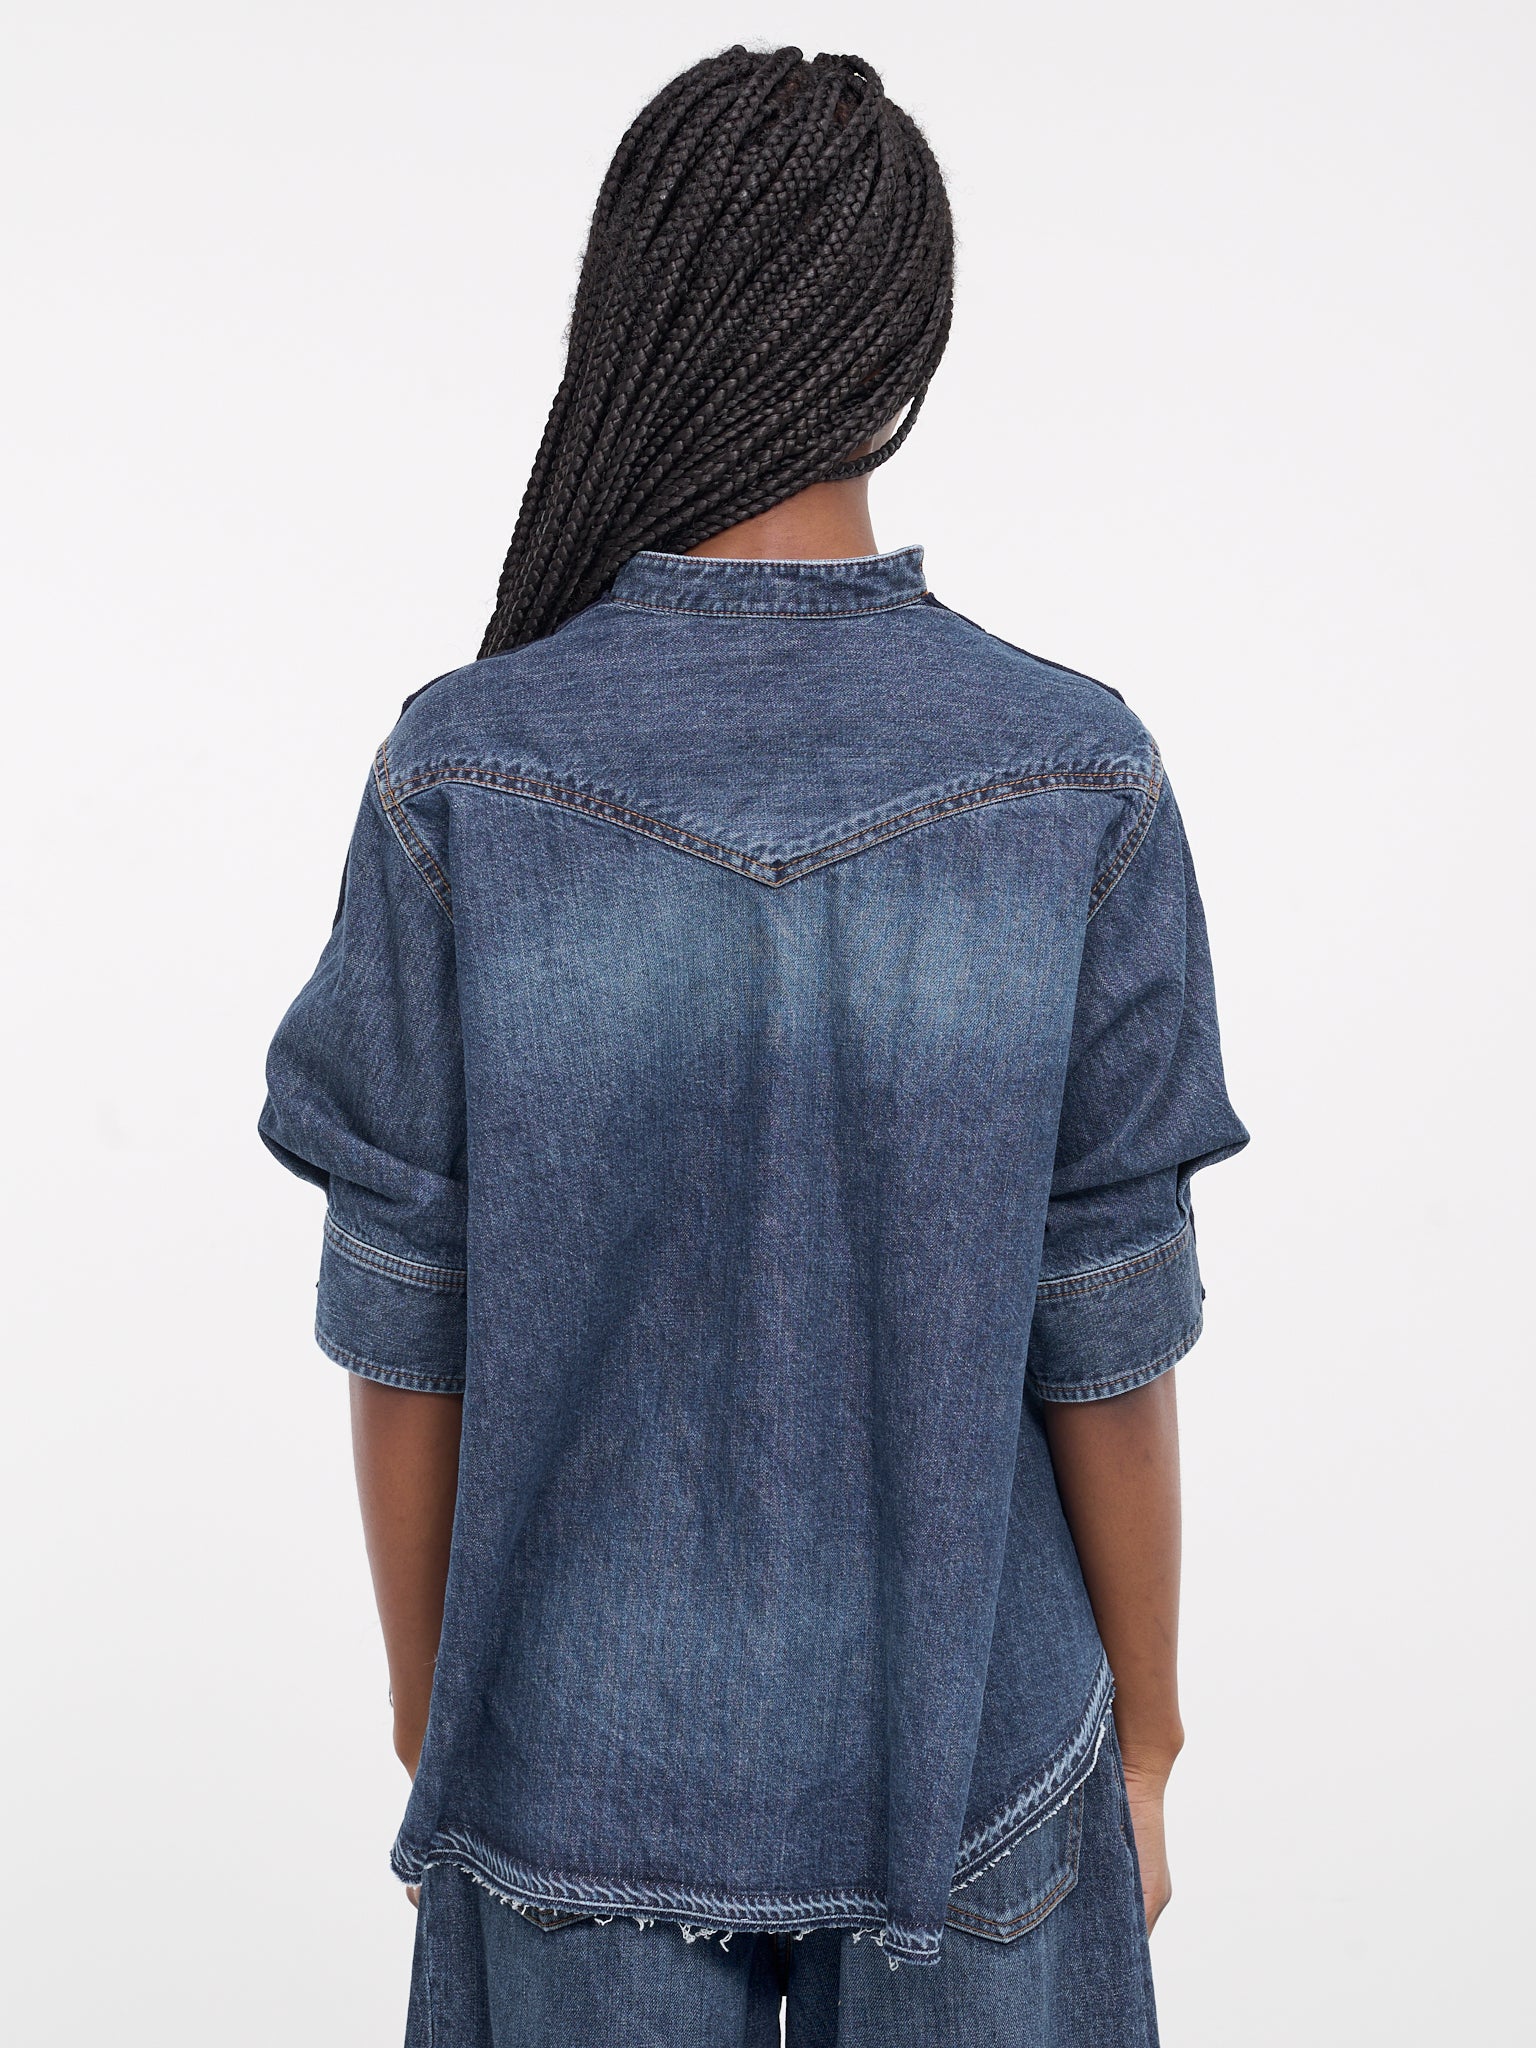 Hybrid Sweater (24-07137-210-BLUE)